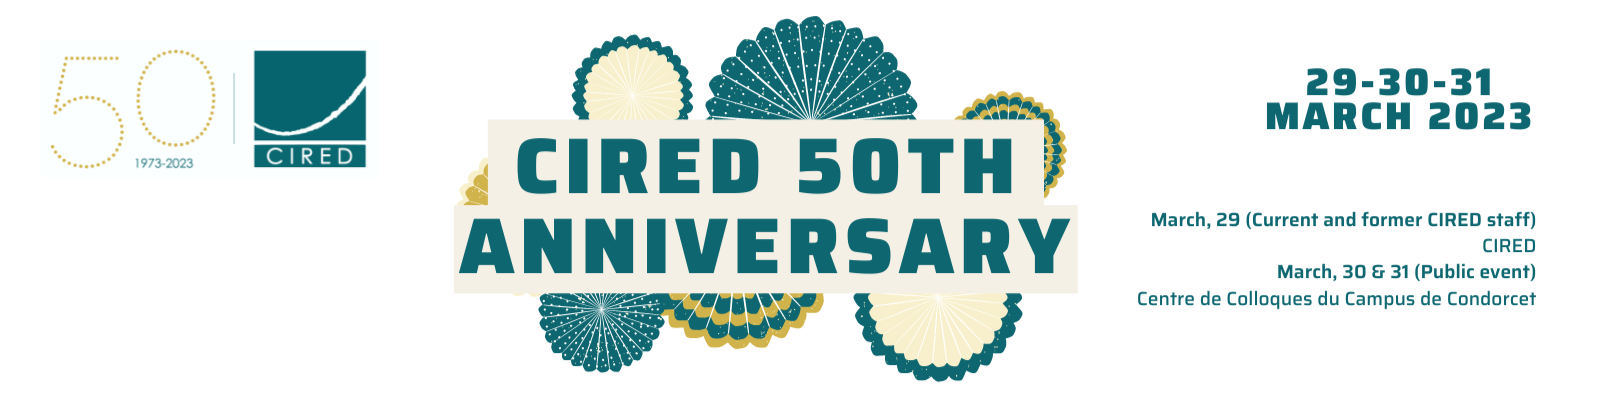 CIRED 50th anniversary